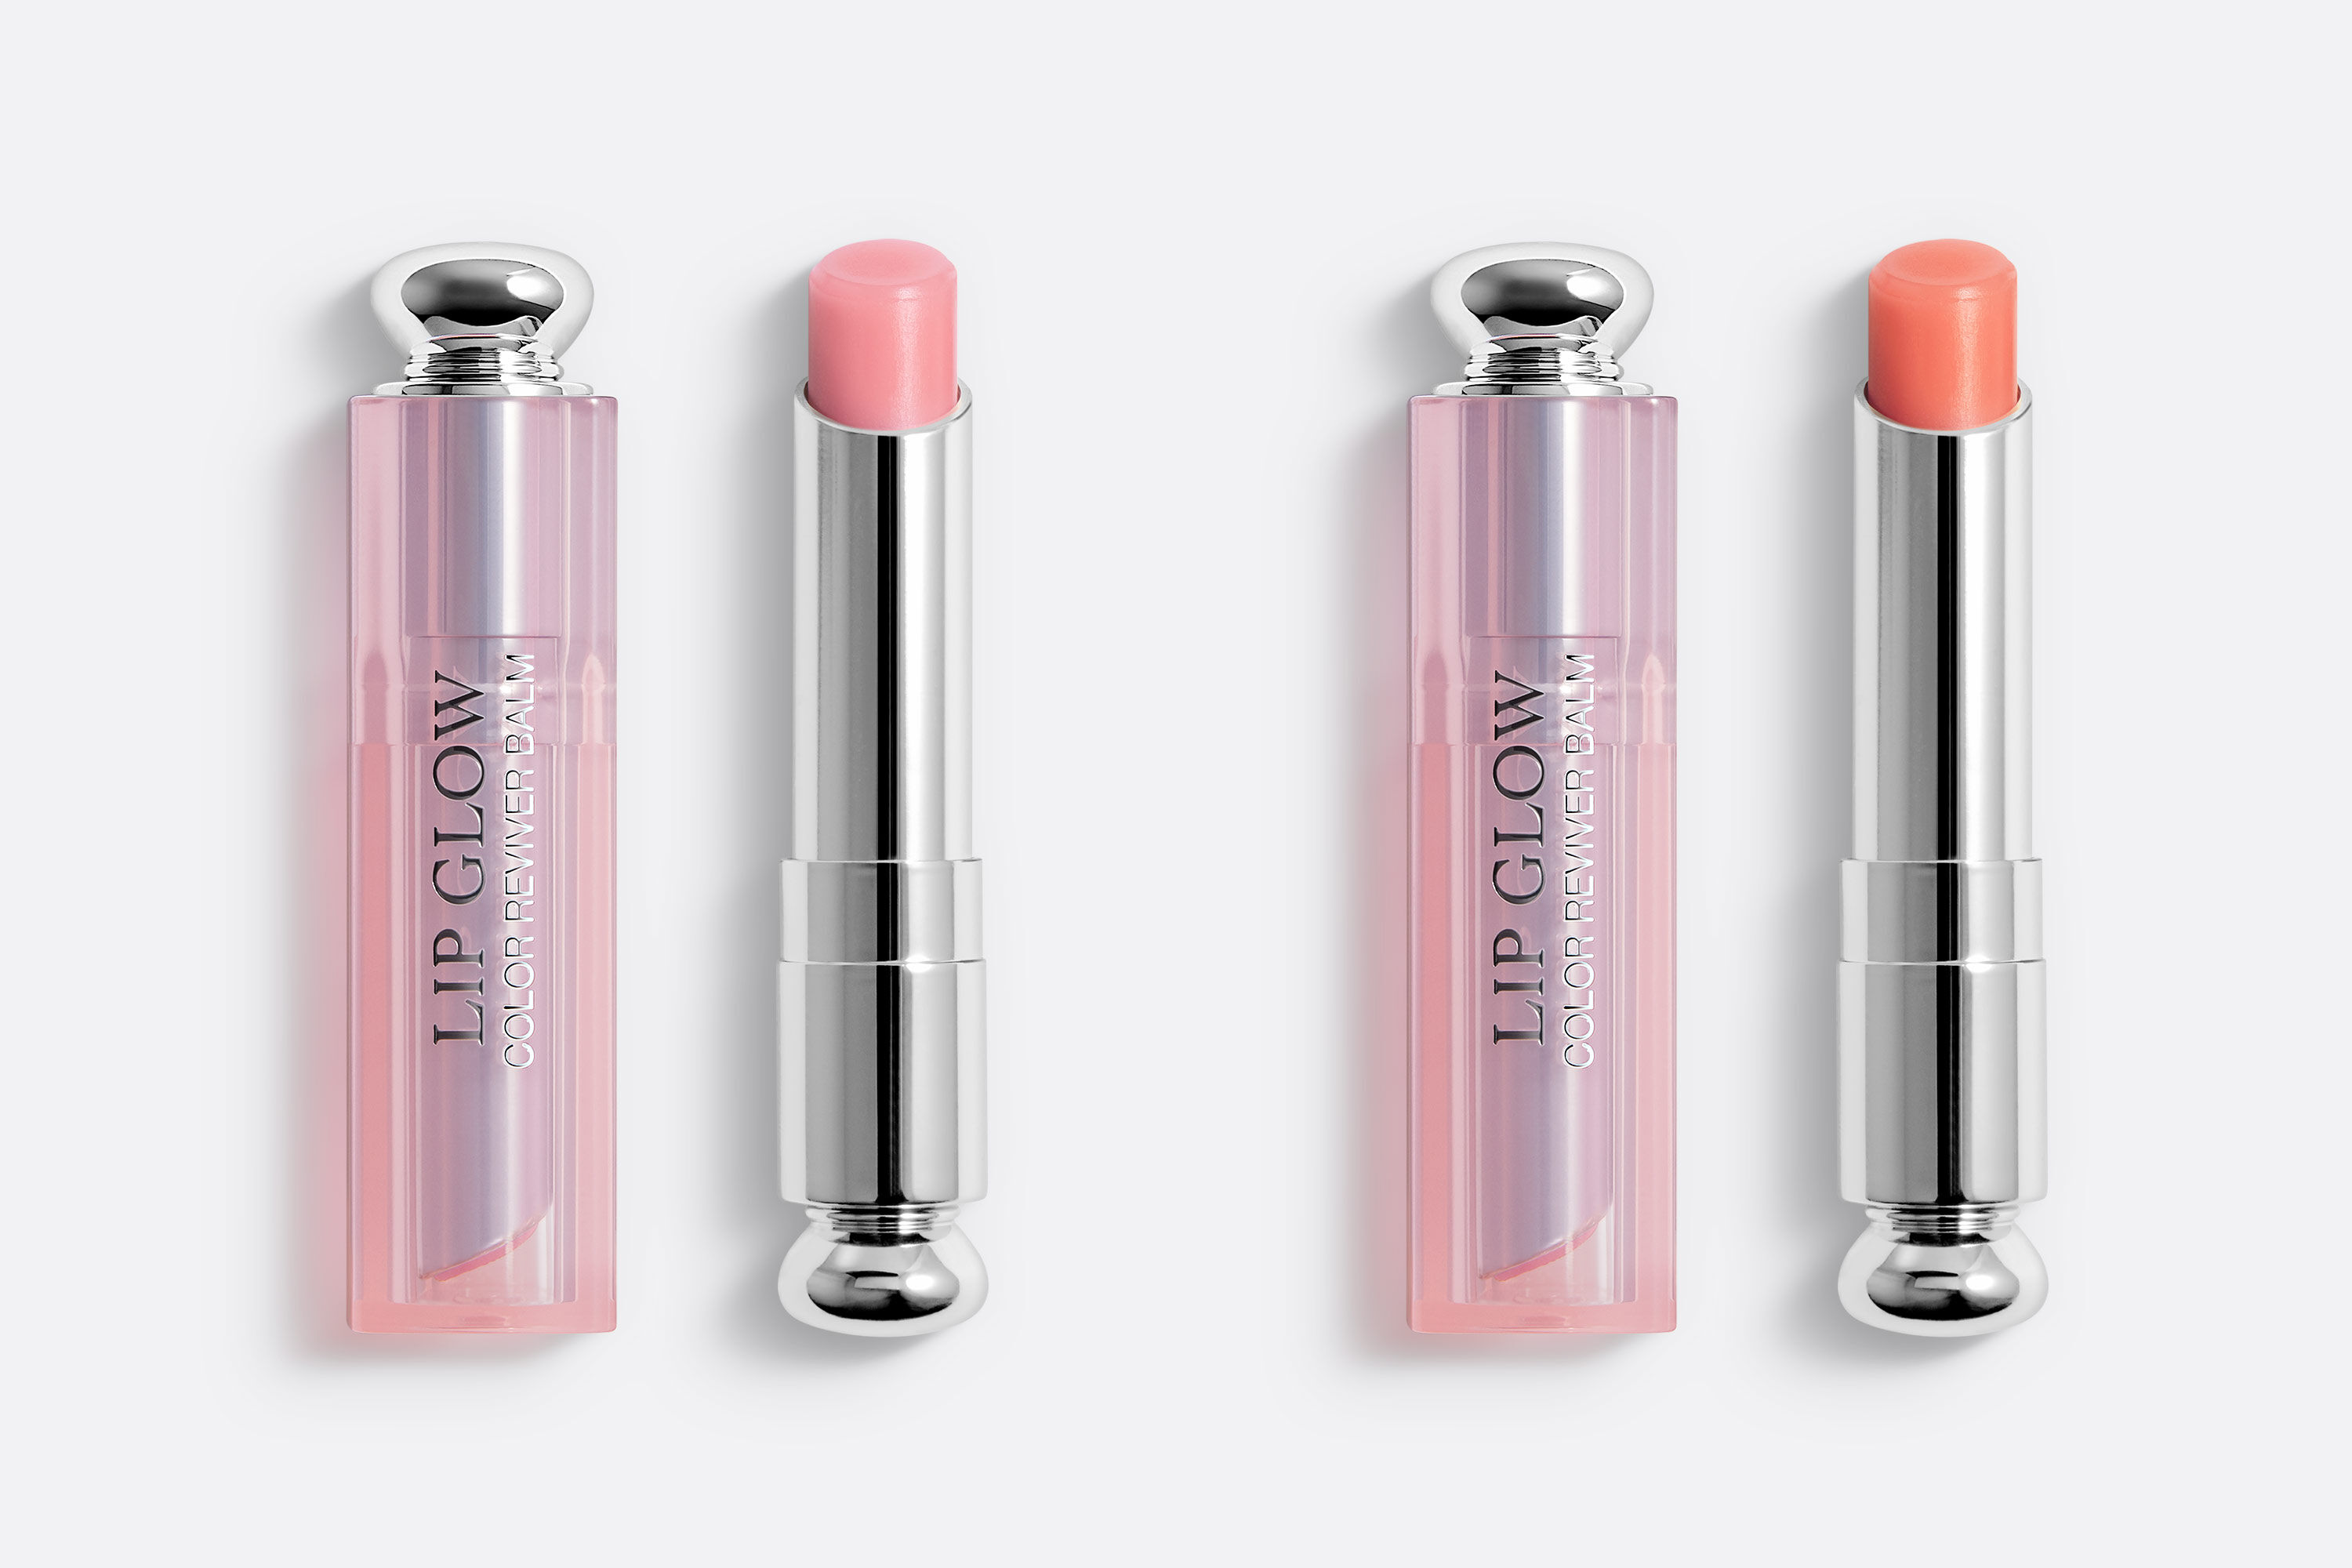 Lipstick Dior Natural Glow Essentials Set by DIOR  Buy online   parfumdreams